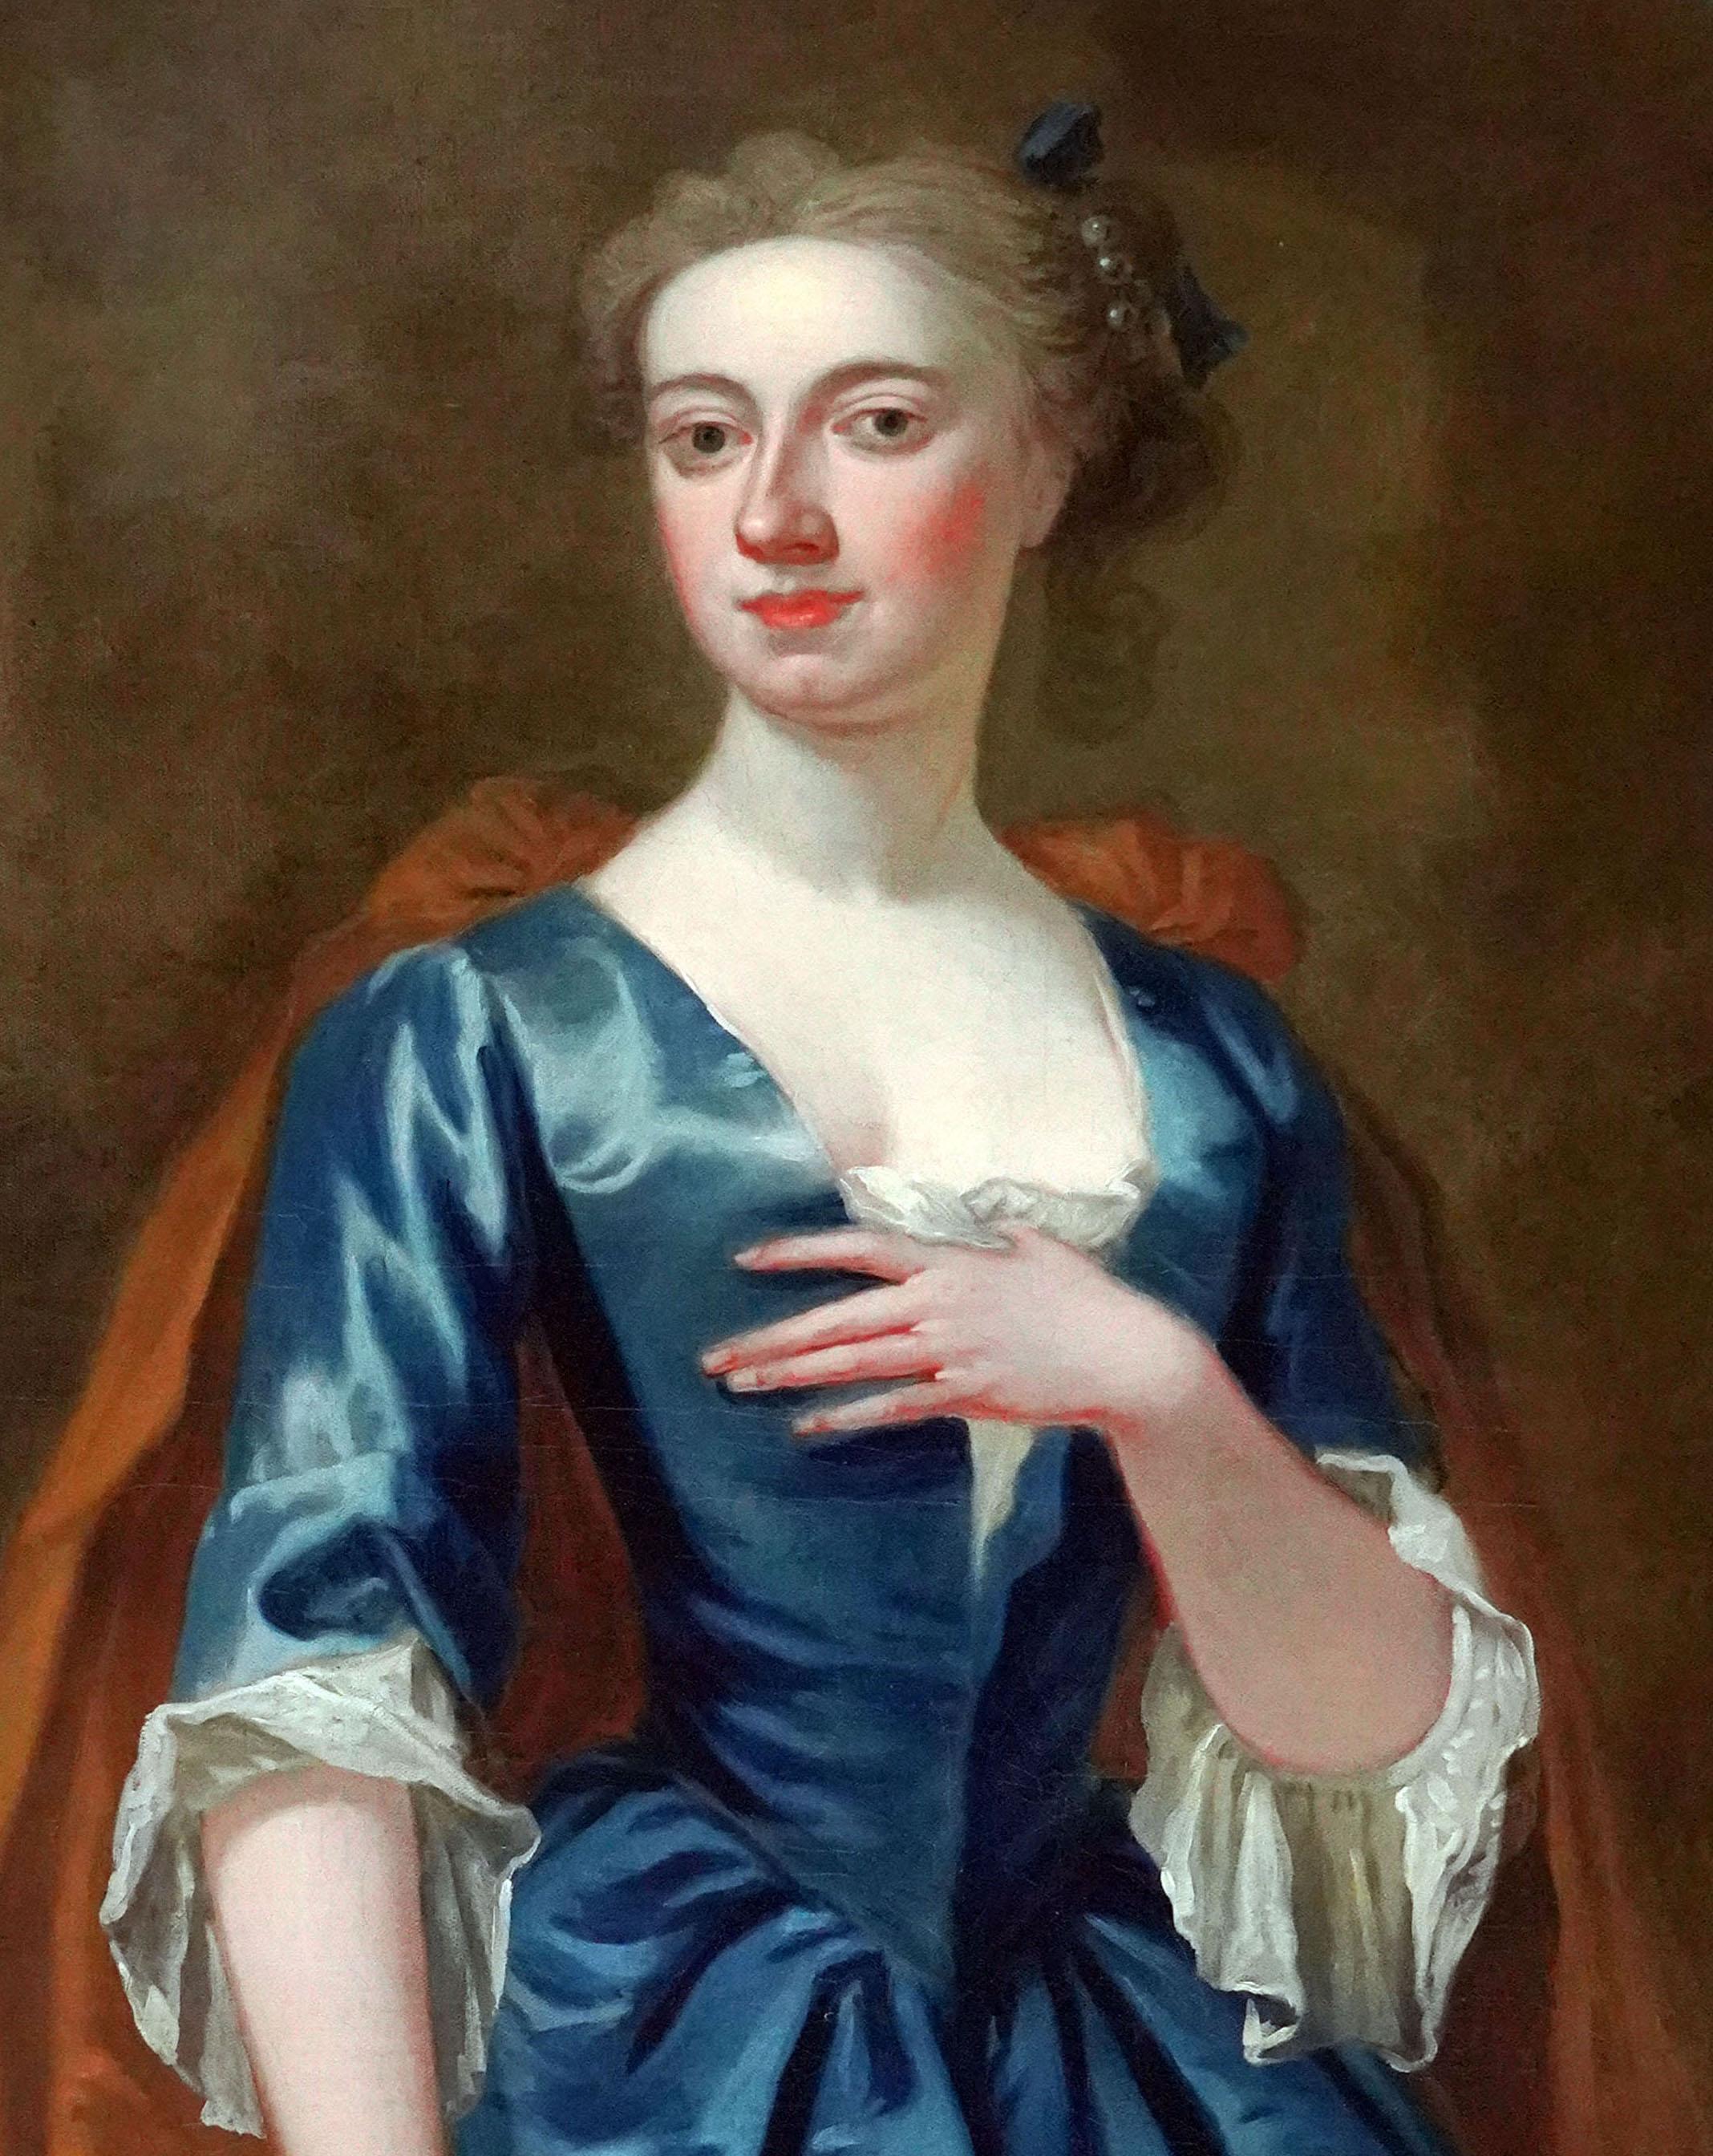 Portrait of Mrs James Hoste  - British 18th century art portrait oil painting  - Old Masters Painting by John Vanderbank